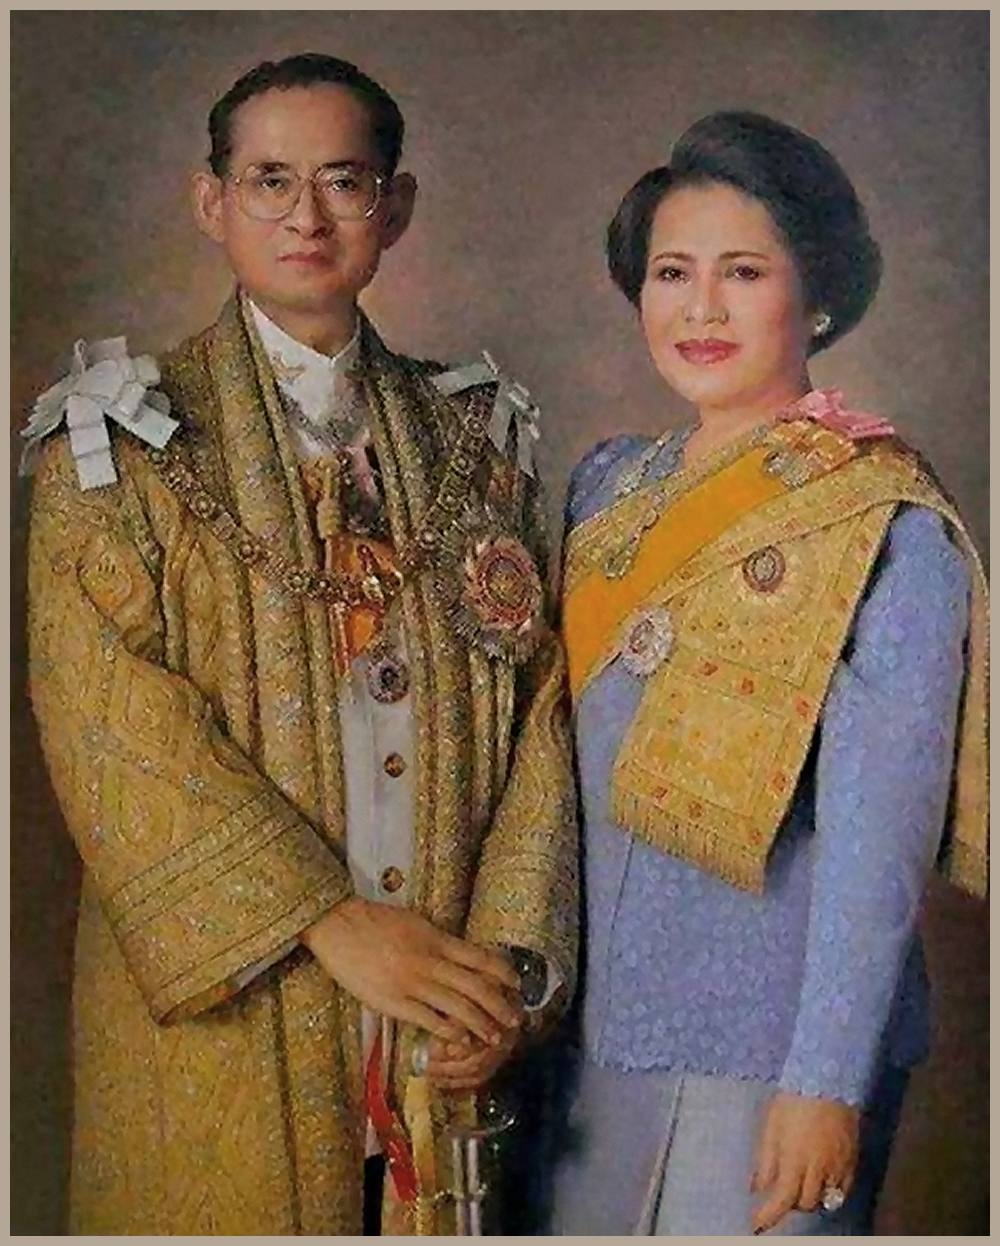 Gemlde Knig Bhumibol Adulyadej mit Ehefrau Knigin Sirikit Kitiyakara